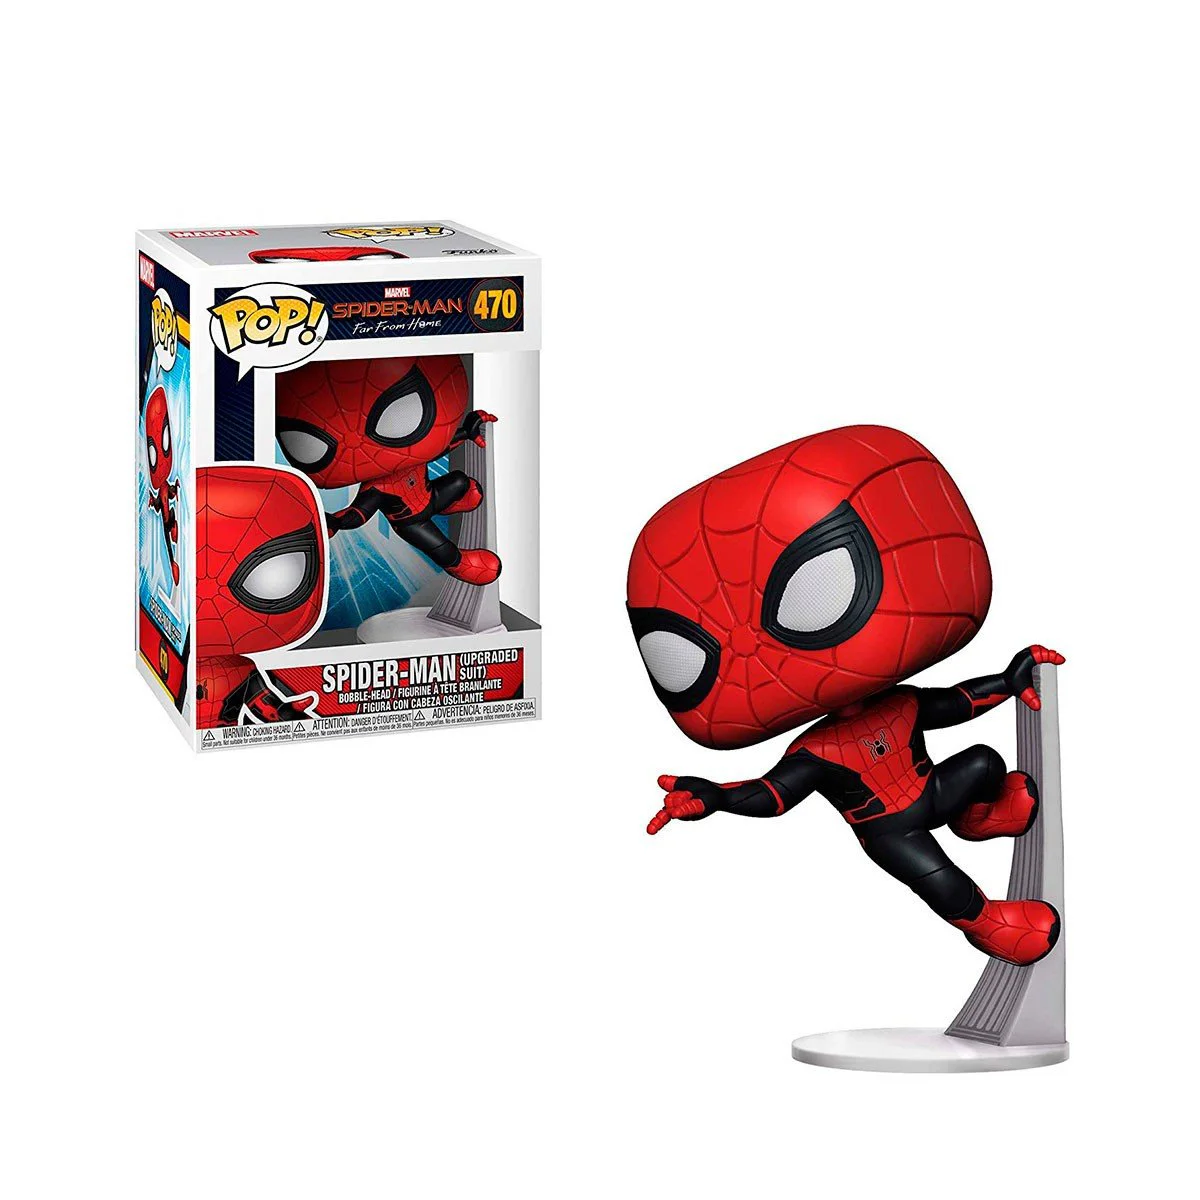 Figurina Spider Man in costum cu suport Funko Pop seria Spider Man, 9.6 cm